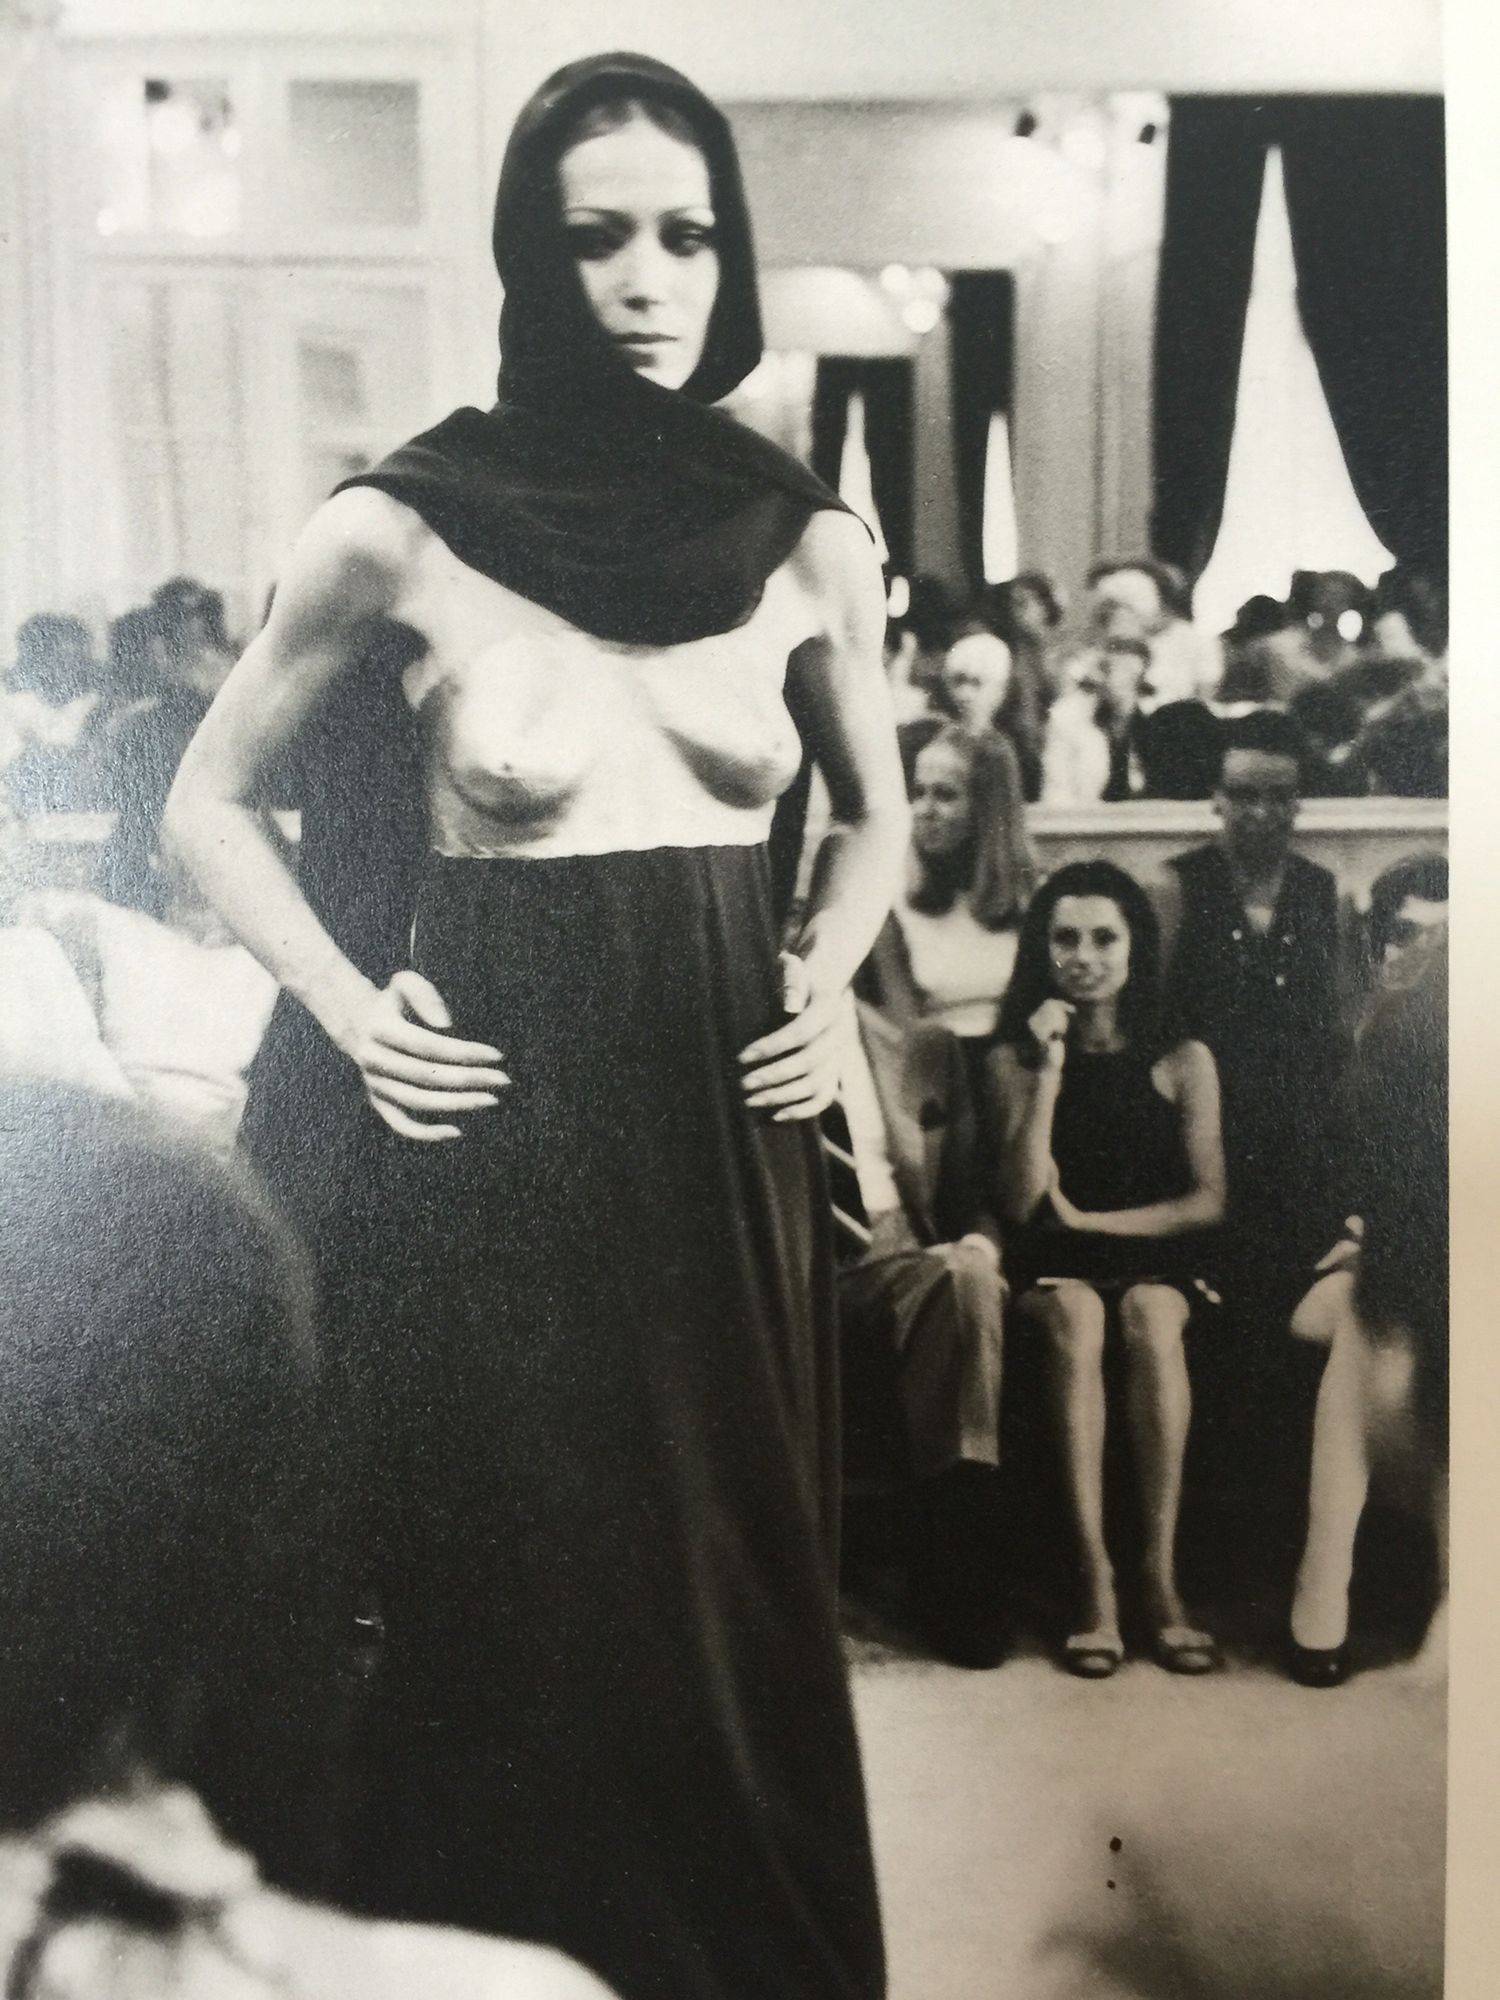 Yves saint laurent  haute couture dress  fall winter 1969